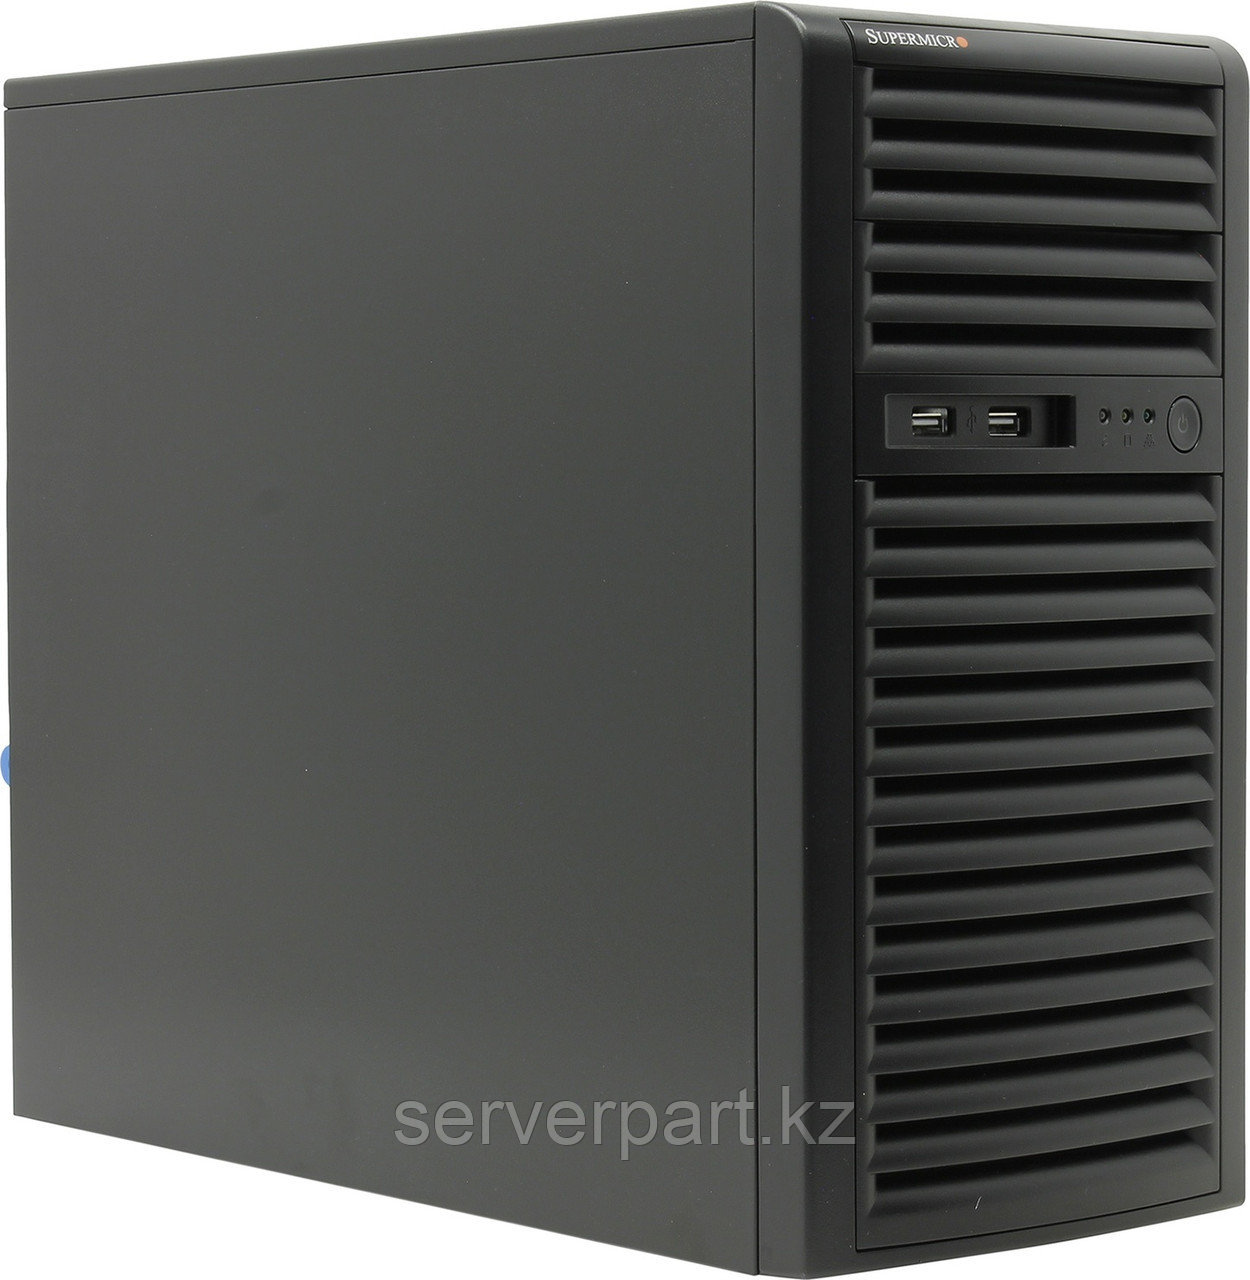 Сервер Supermicro SYS-5039C (Tower 4LFF)/4-core intel xeon E2224 (3.4GHz)/16GB EUDIMM, фото 1